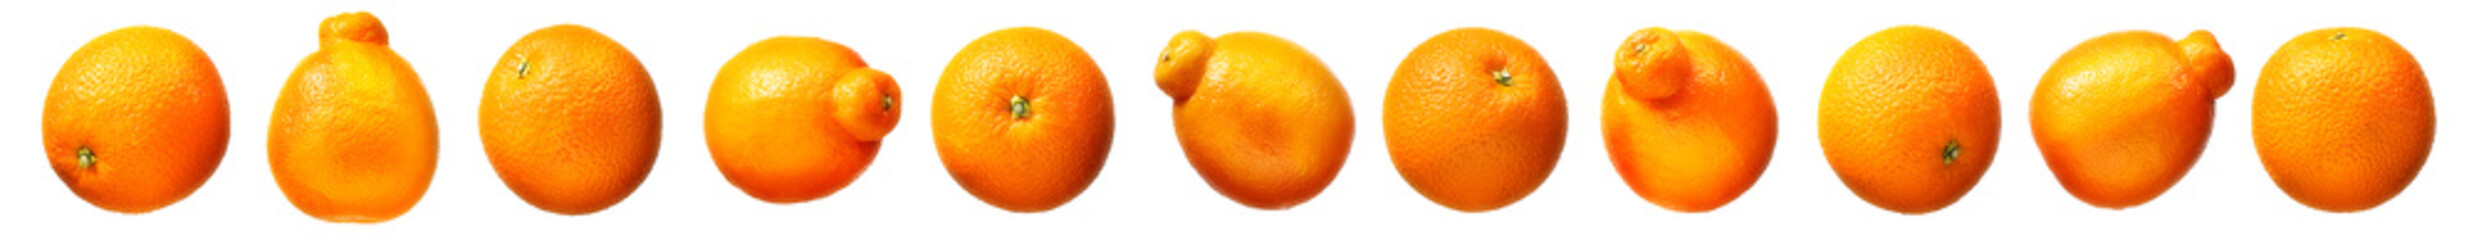 Group of oranges and mandarins isolated on white background